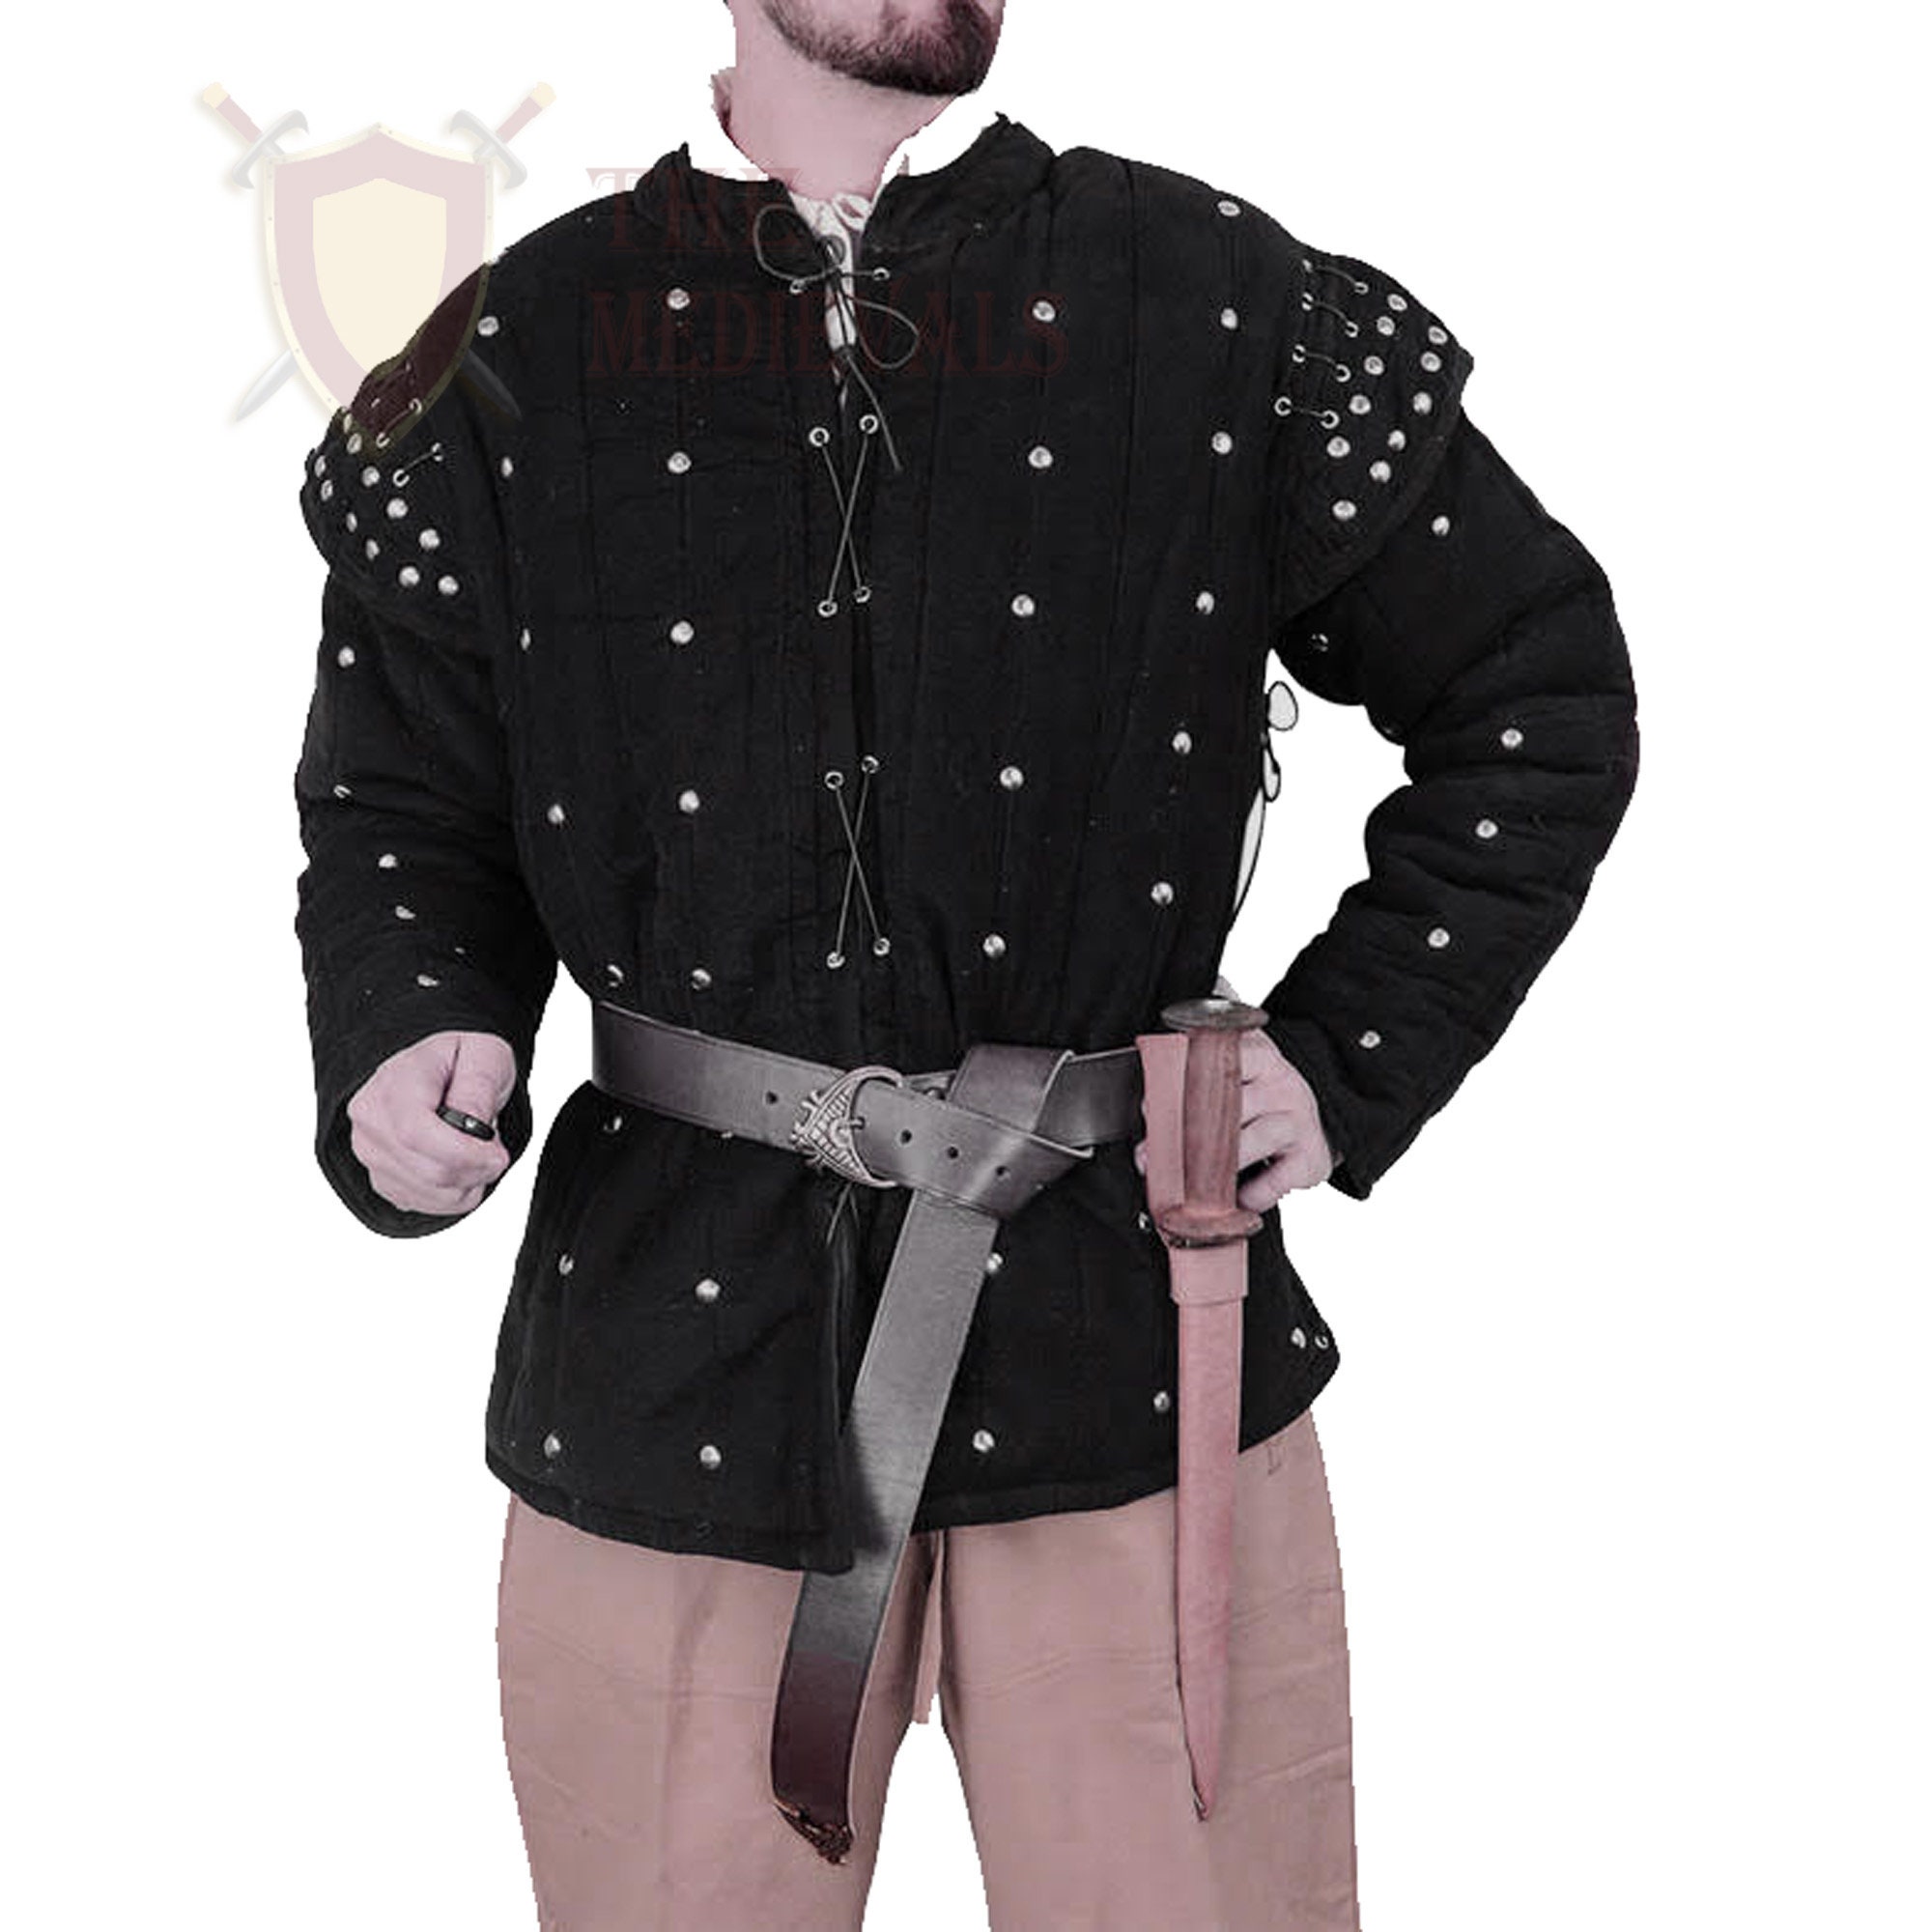 Souvenir India Medieval Thick Padded Gambeson Coat Aketon Jacket Armor